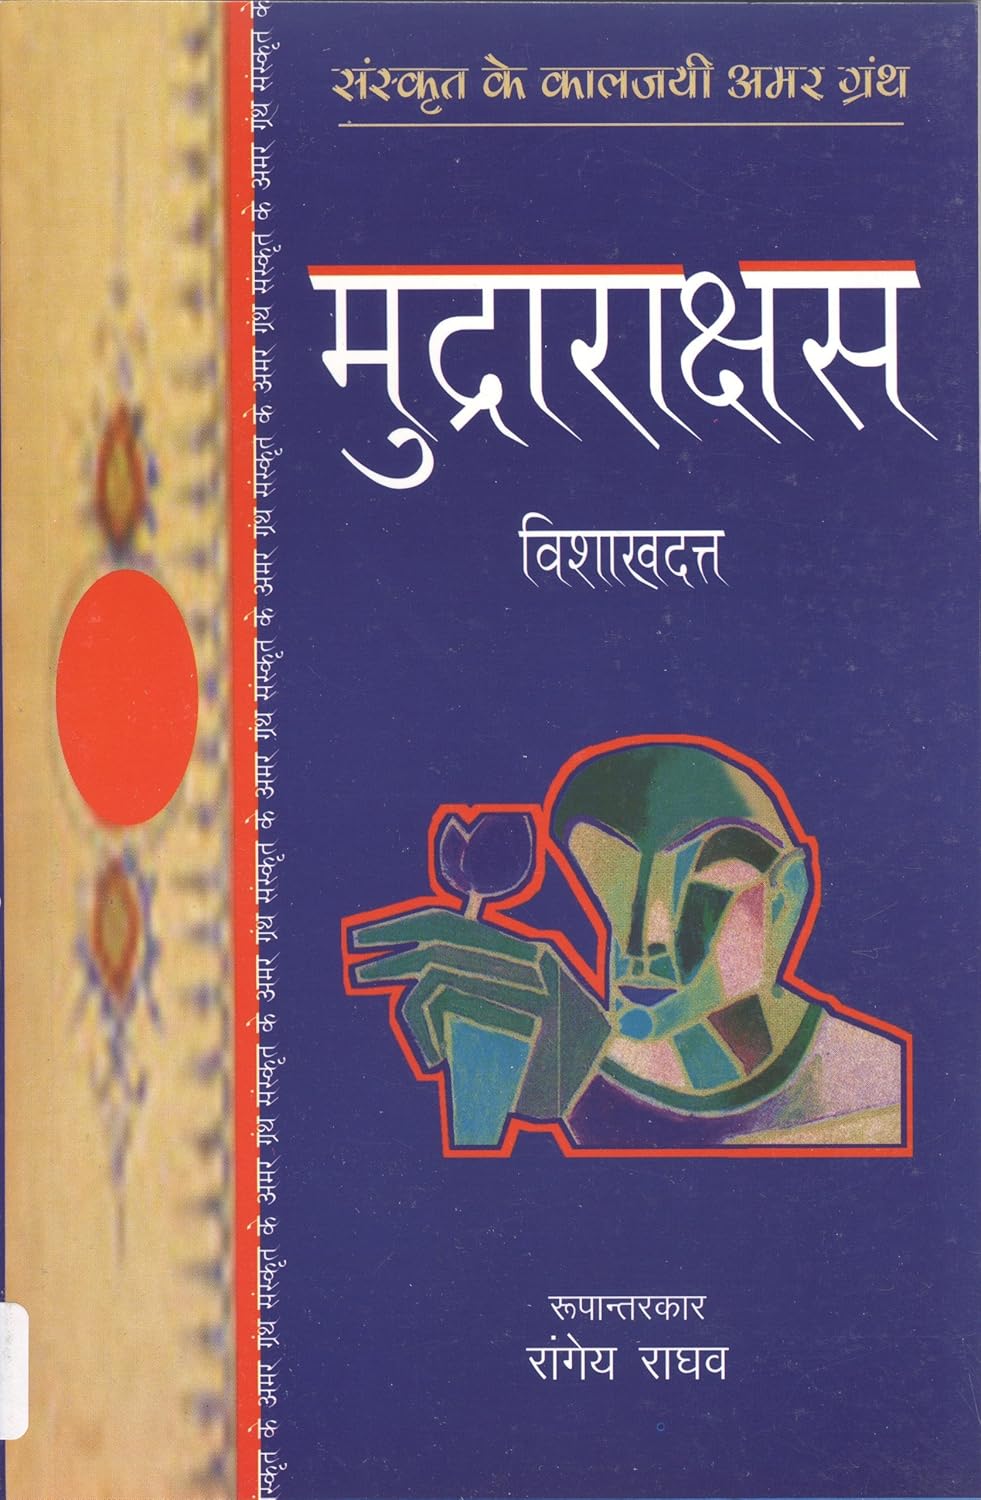 Mudrarakhshas (sanskrit classics) / मुद्राराक्षस (संस्कृत क्लाससिक्स )Book PDF Download